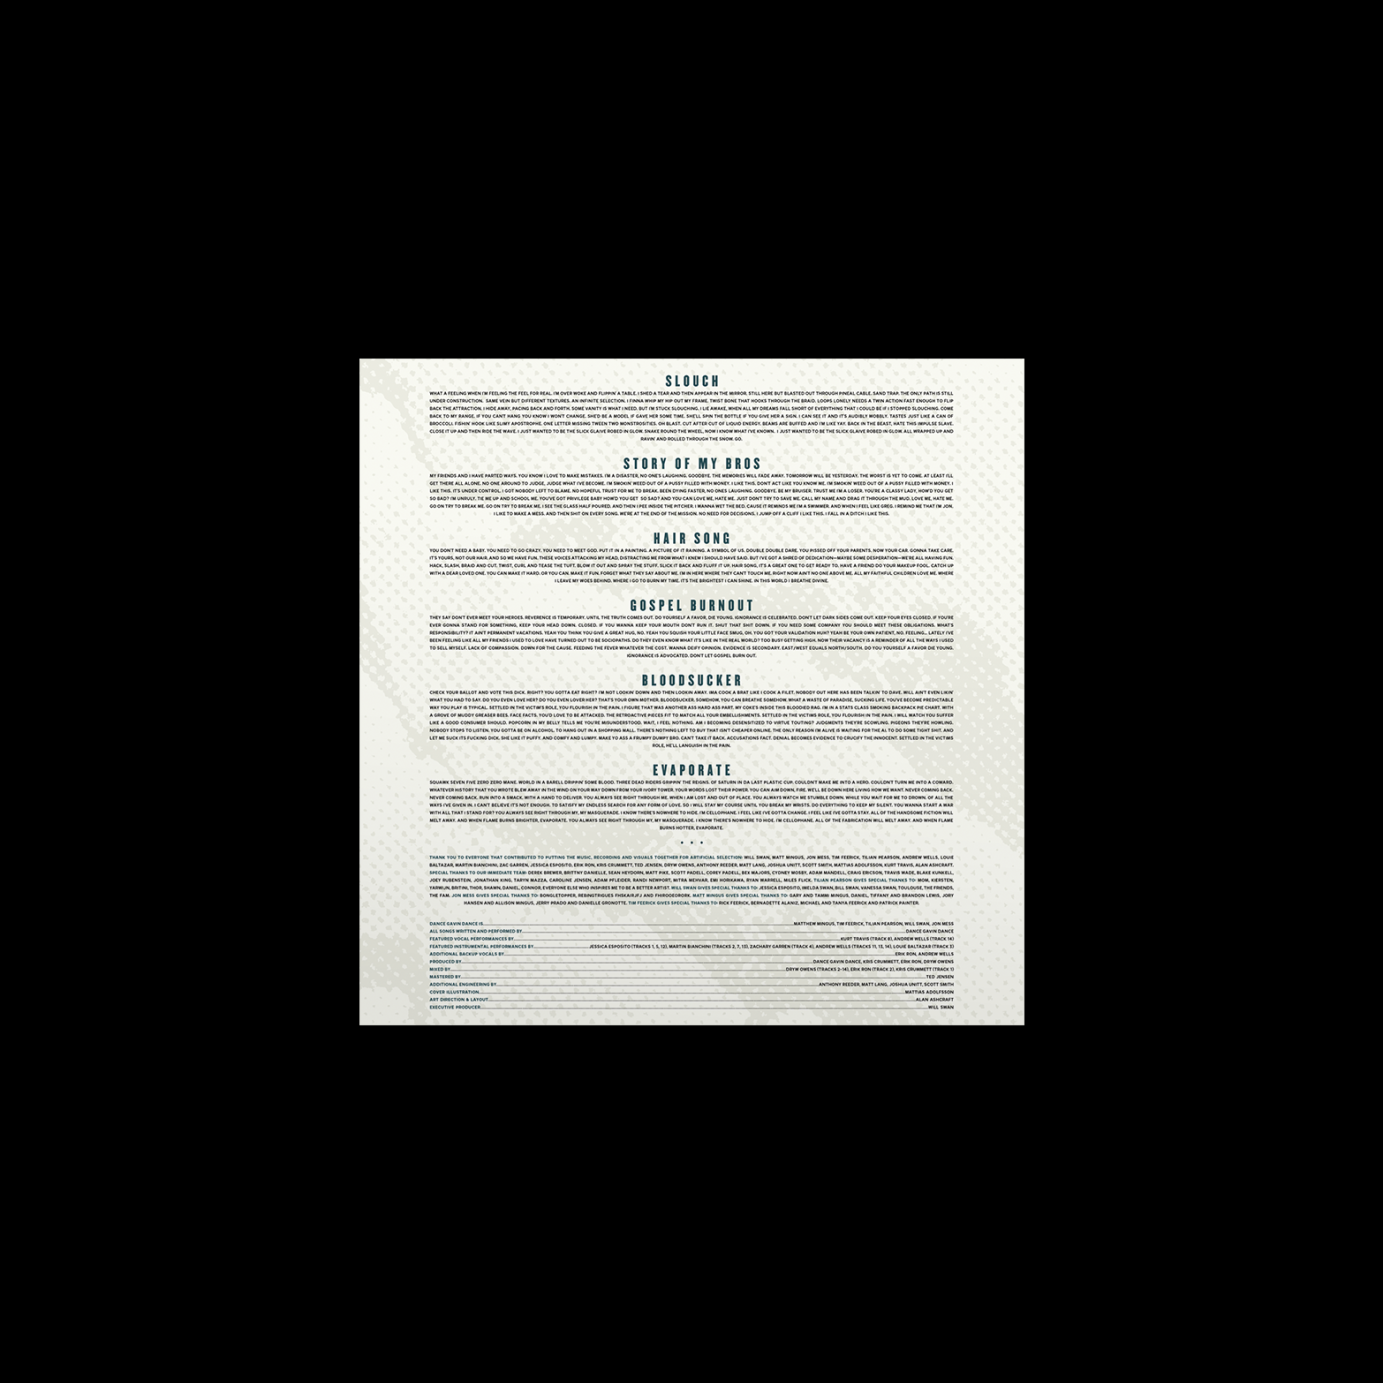 Dance Gavin Dance - Artificial Selection LP Layout